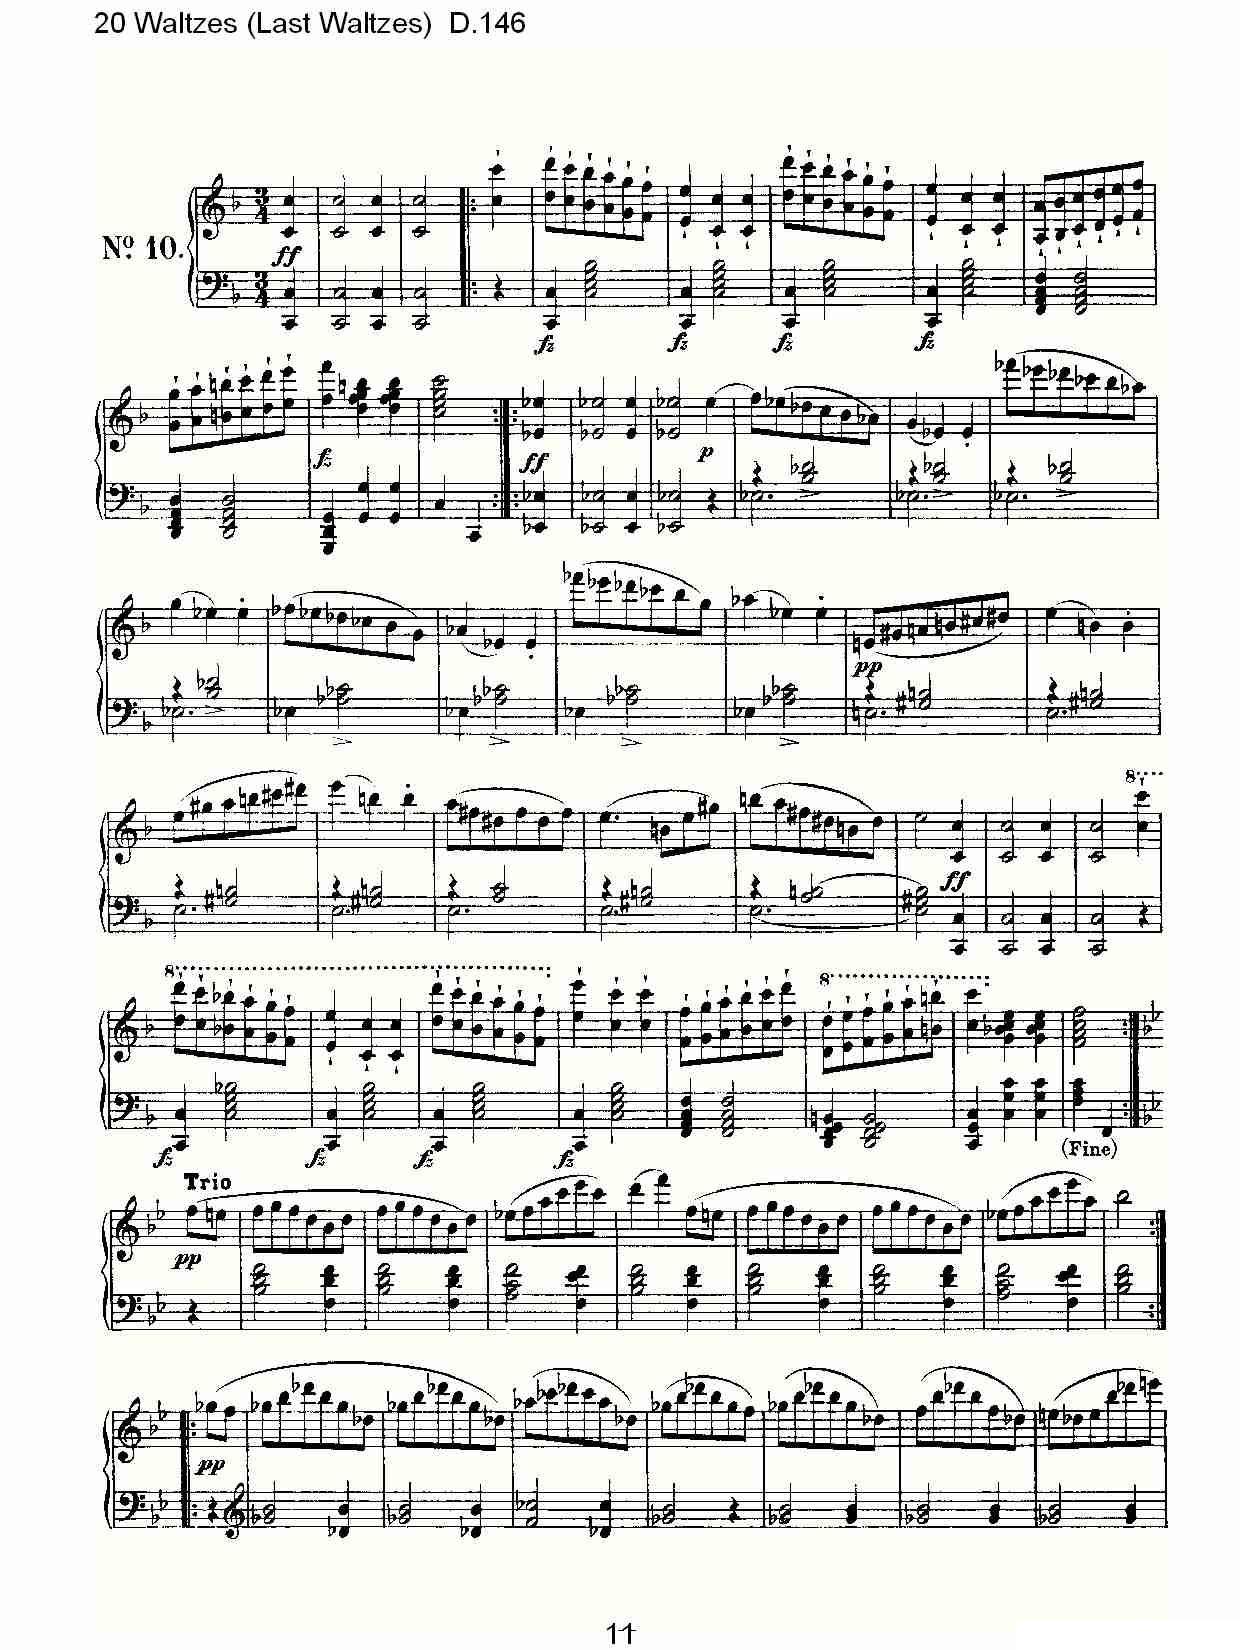 20 Waltzes（Last Waltzes) D.14）钢琴曲谱（图11）